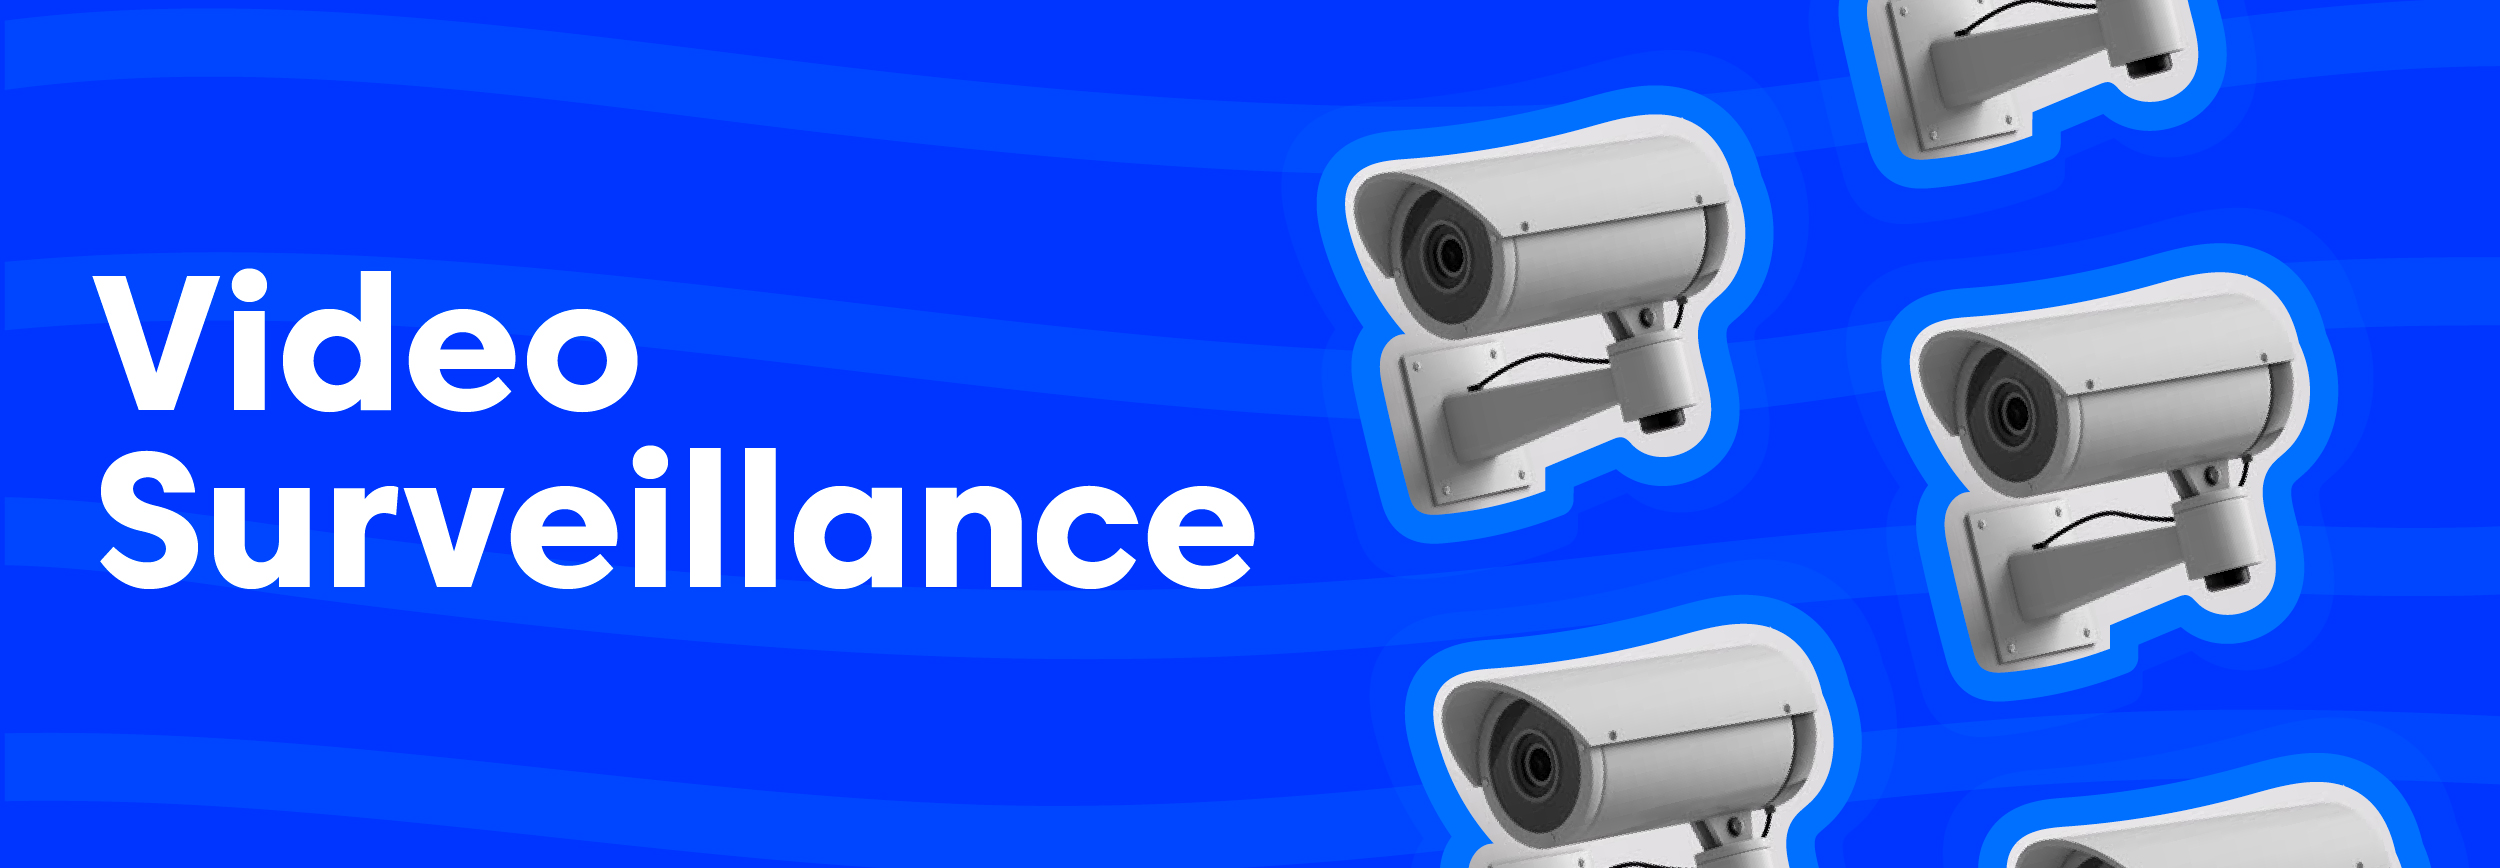 What is Video Surveillance